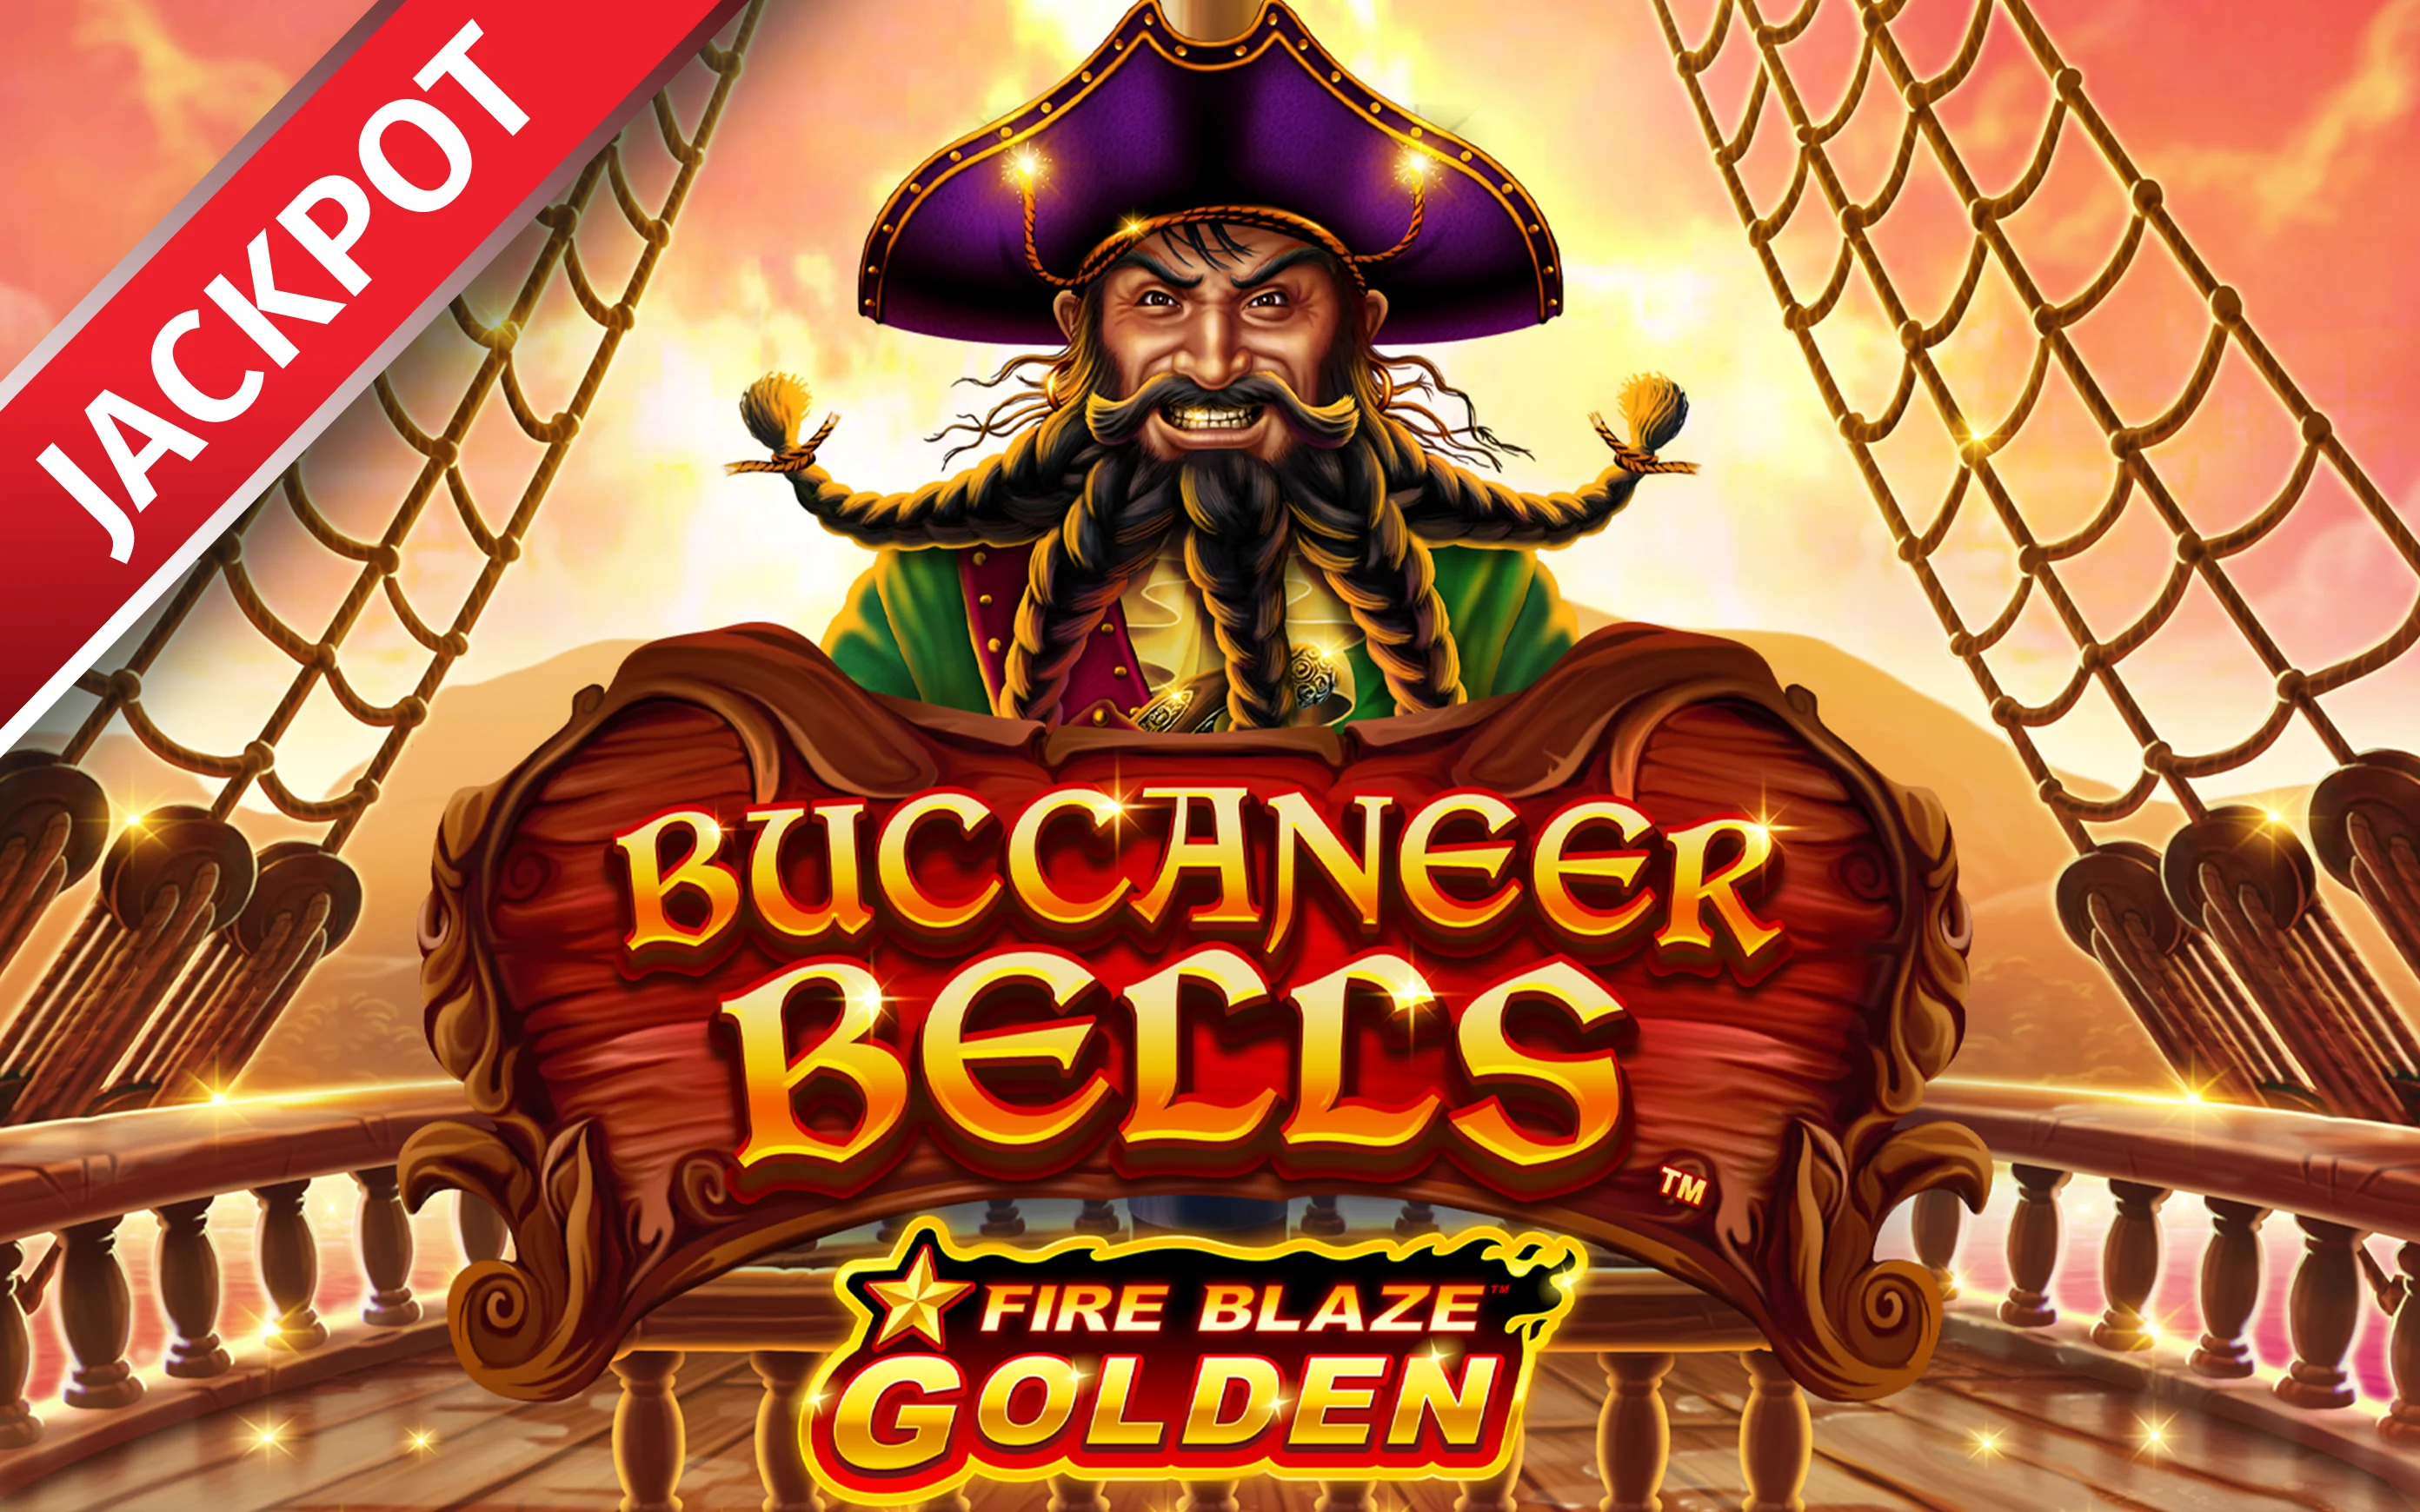 Zagraj w Fire Blaze Golden Buccaneer Bells w kasynie online Starcasino.be